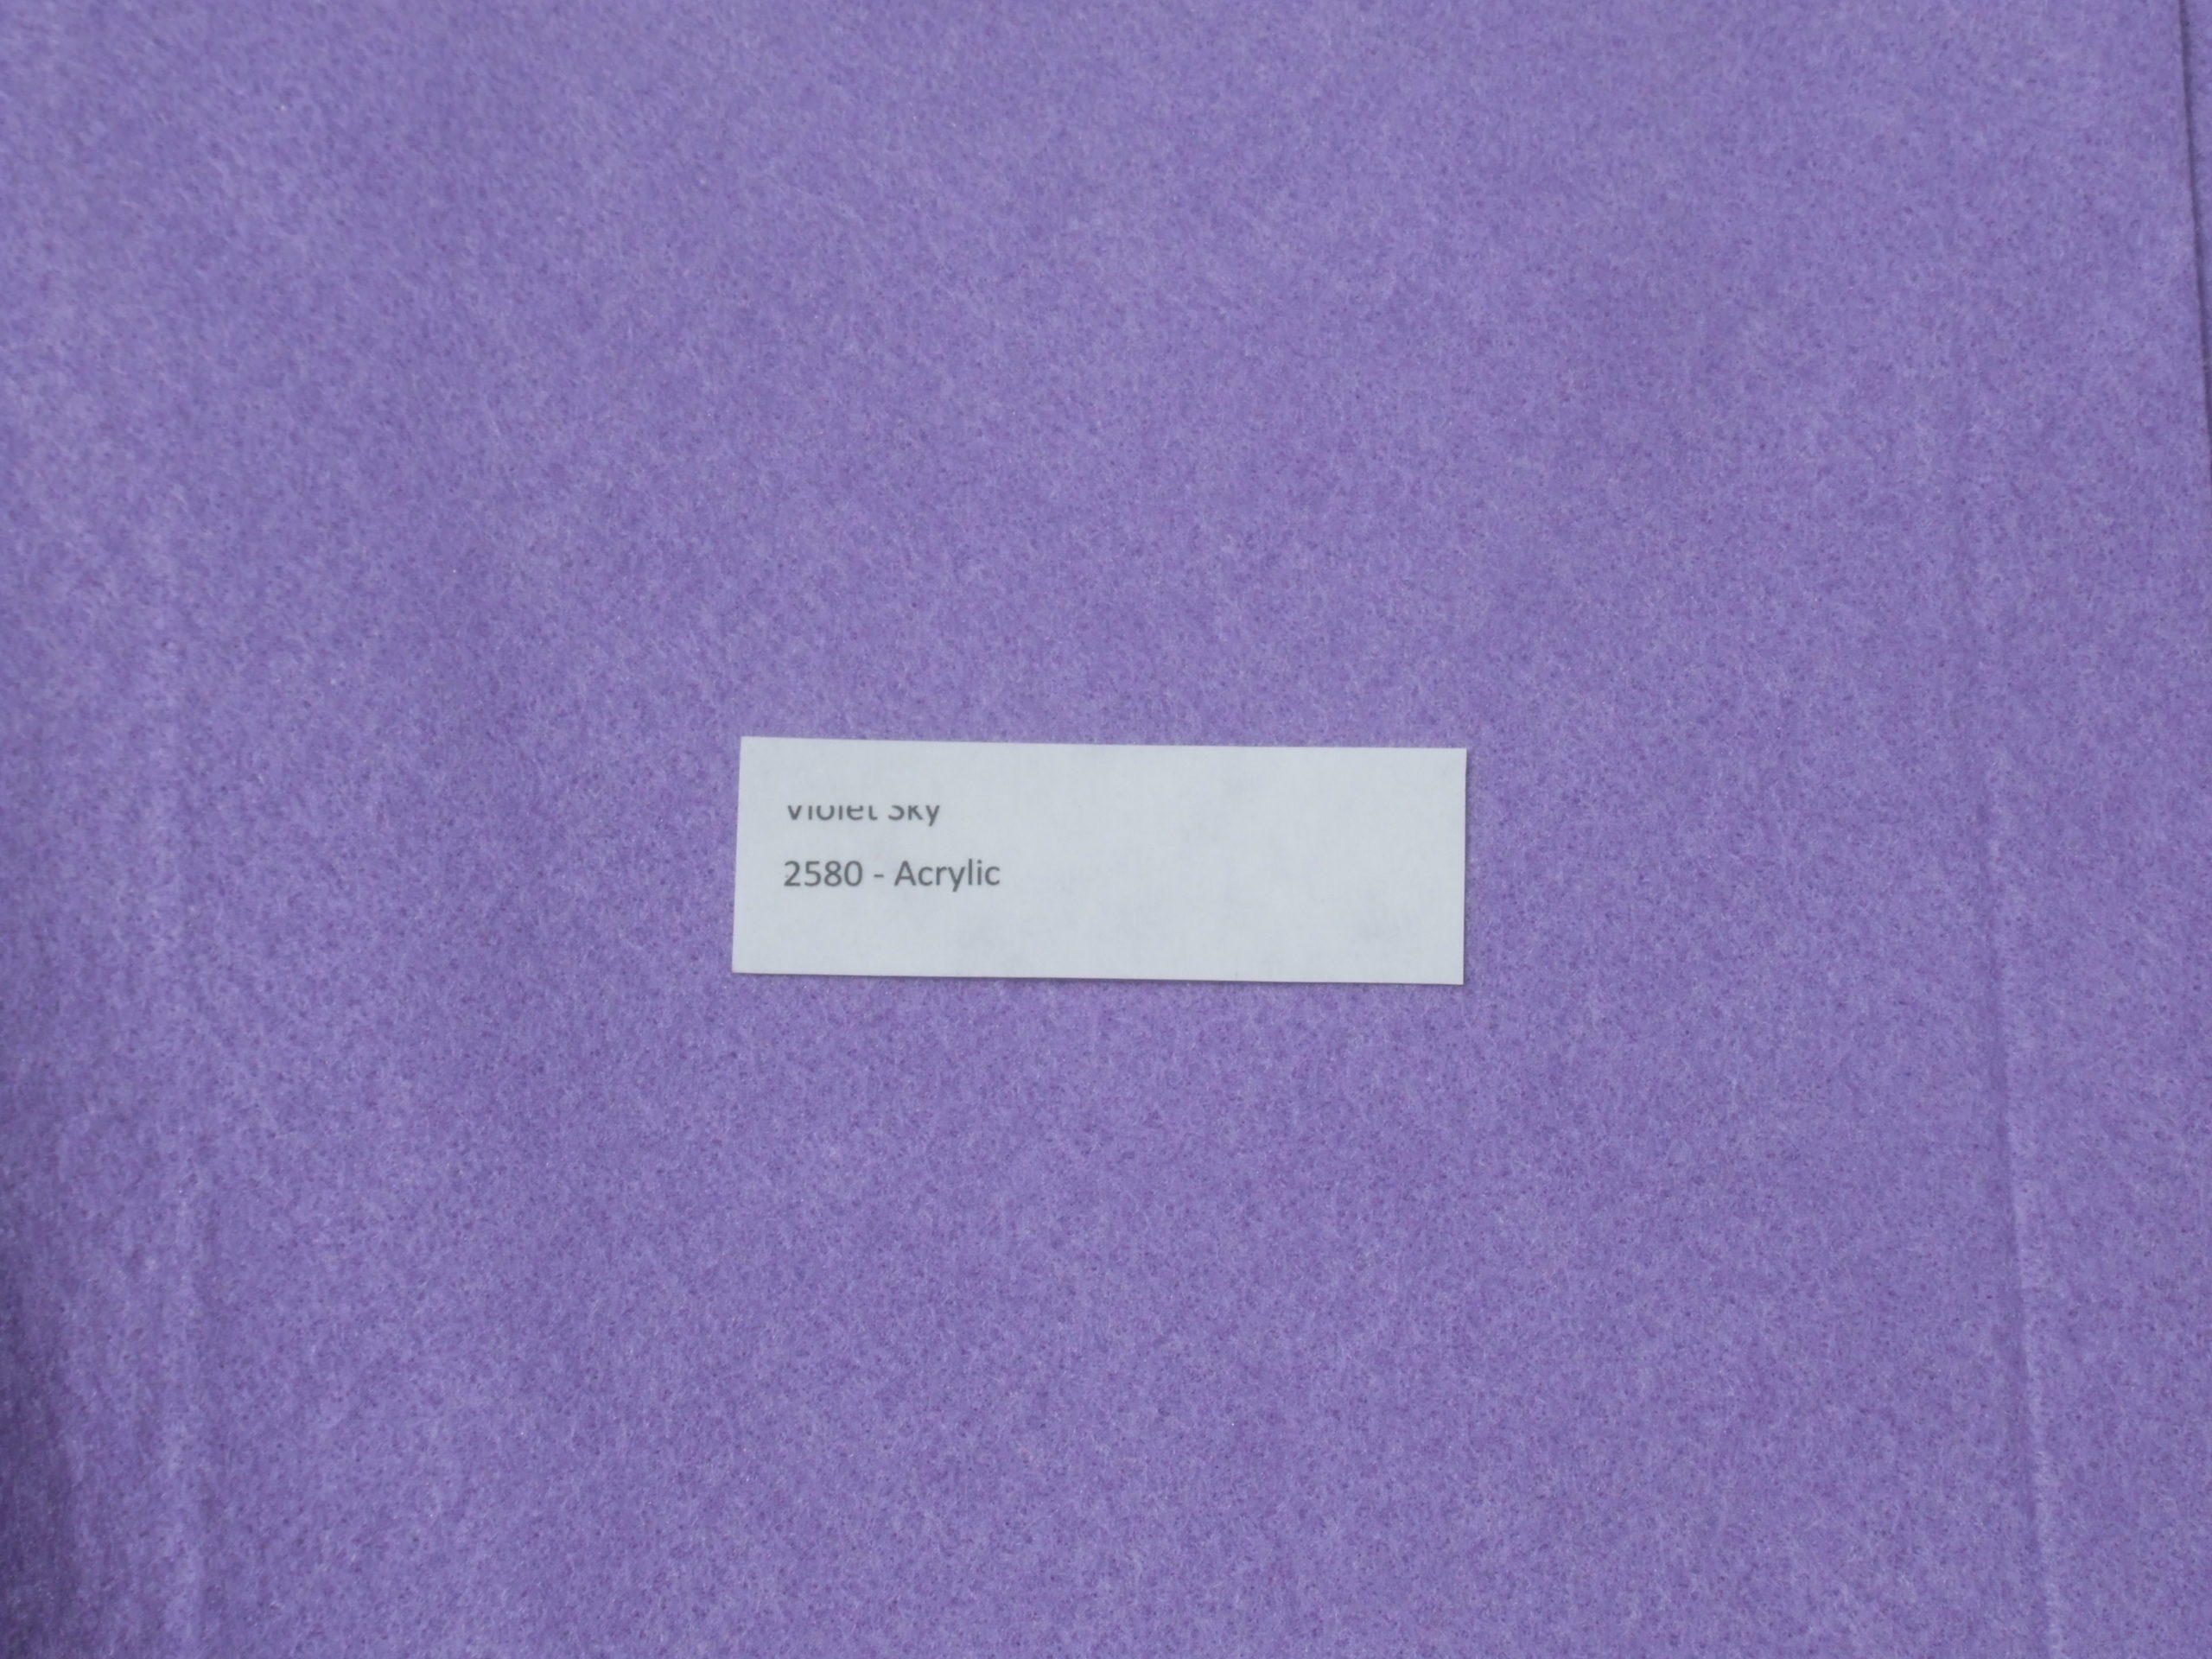 Acrylic Soft Felt Fabric Sheets Fiber Sheets 39x39 Inch 3mm Thick - Bed  Bath & Beyond - 37419377